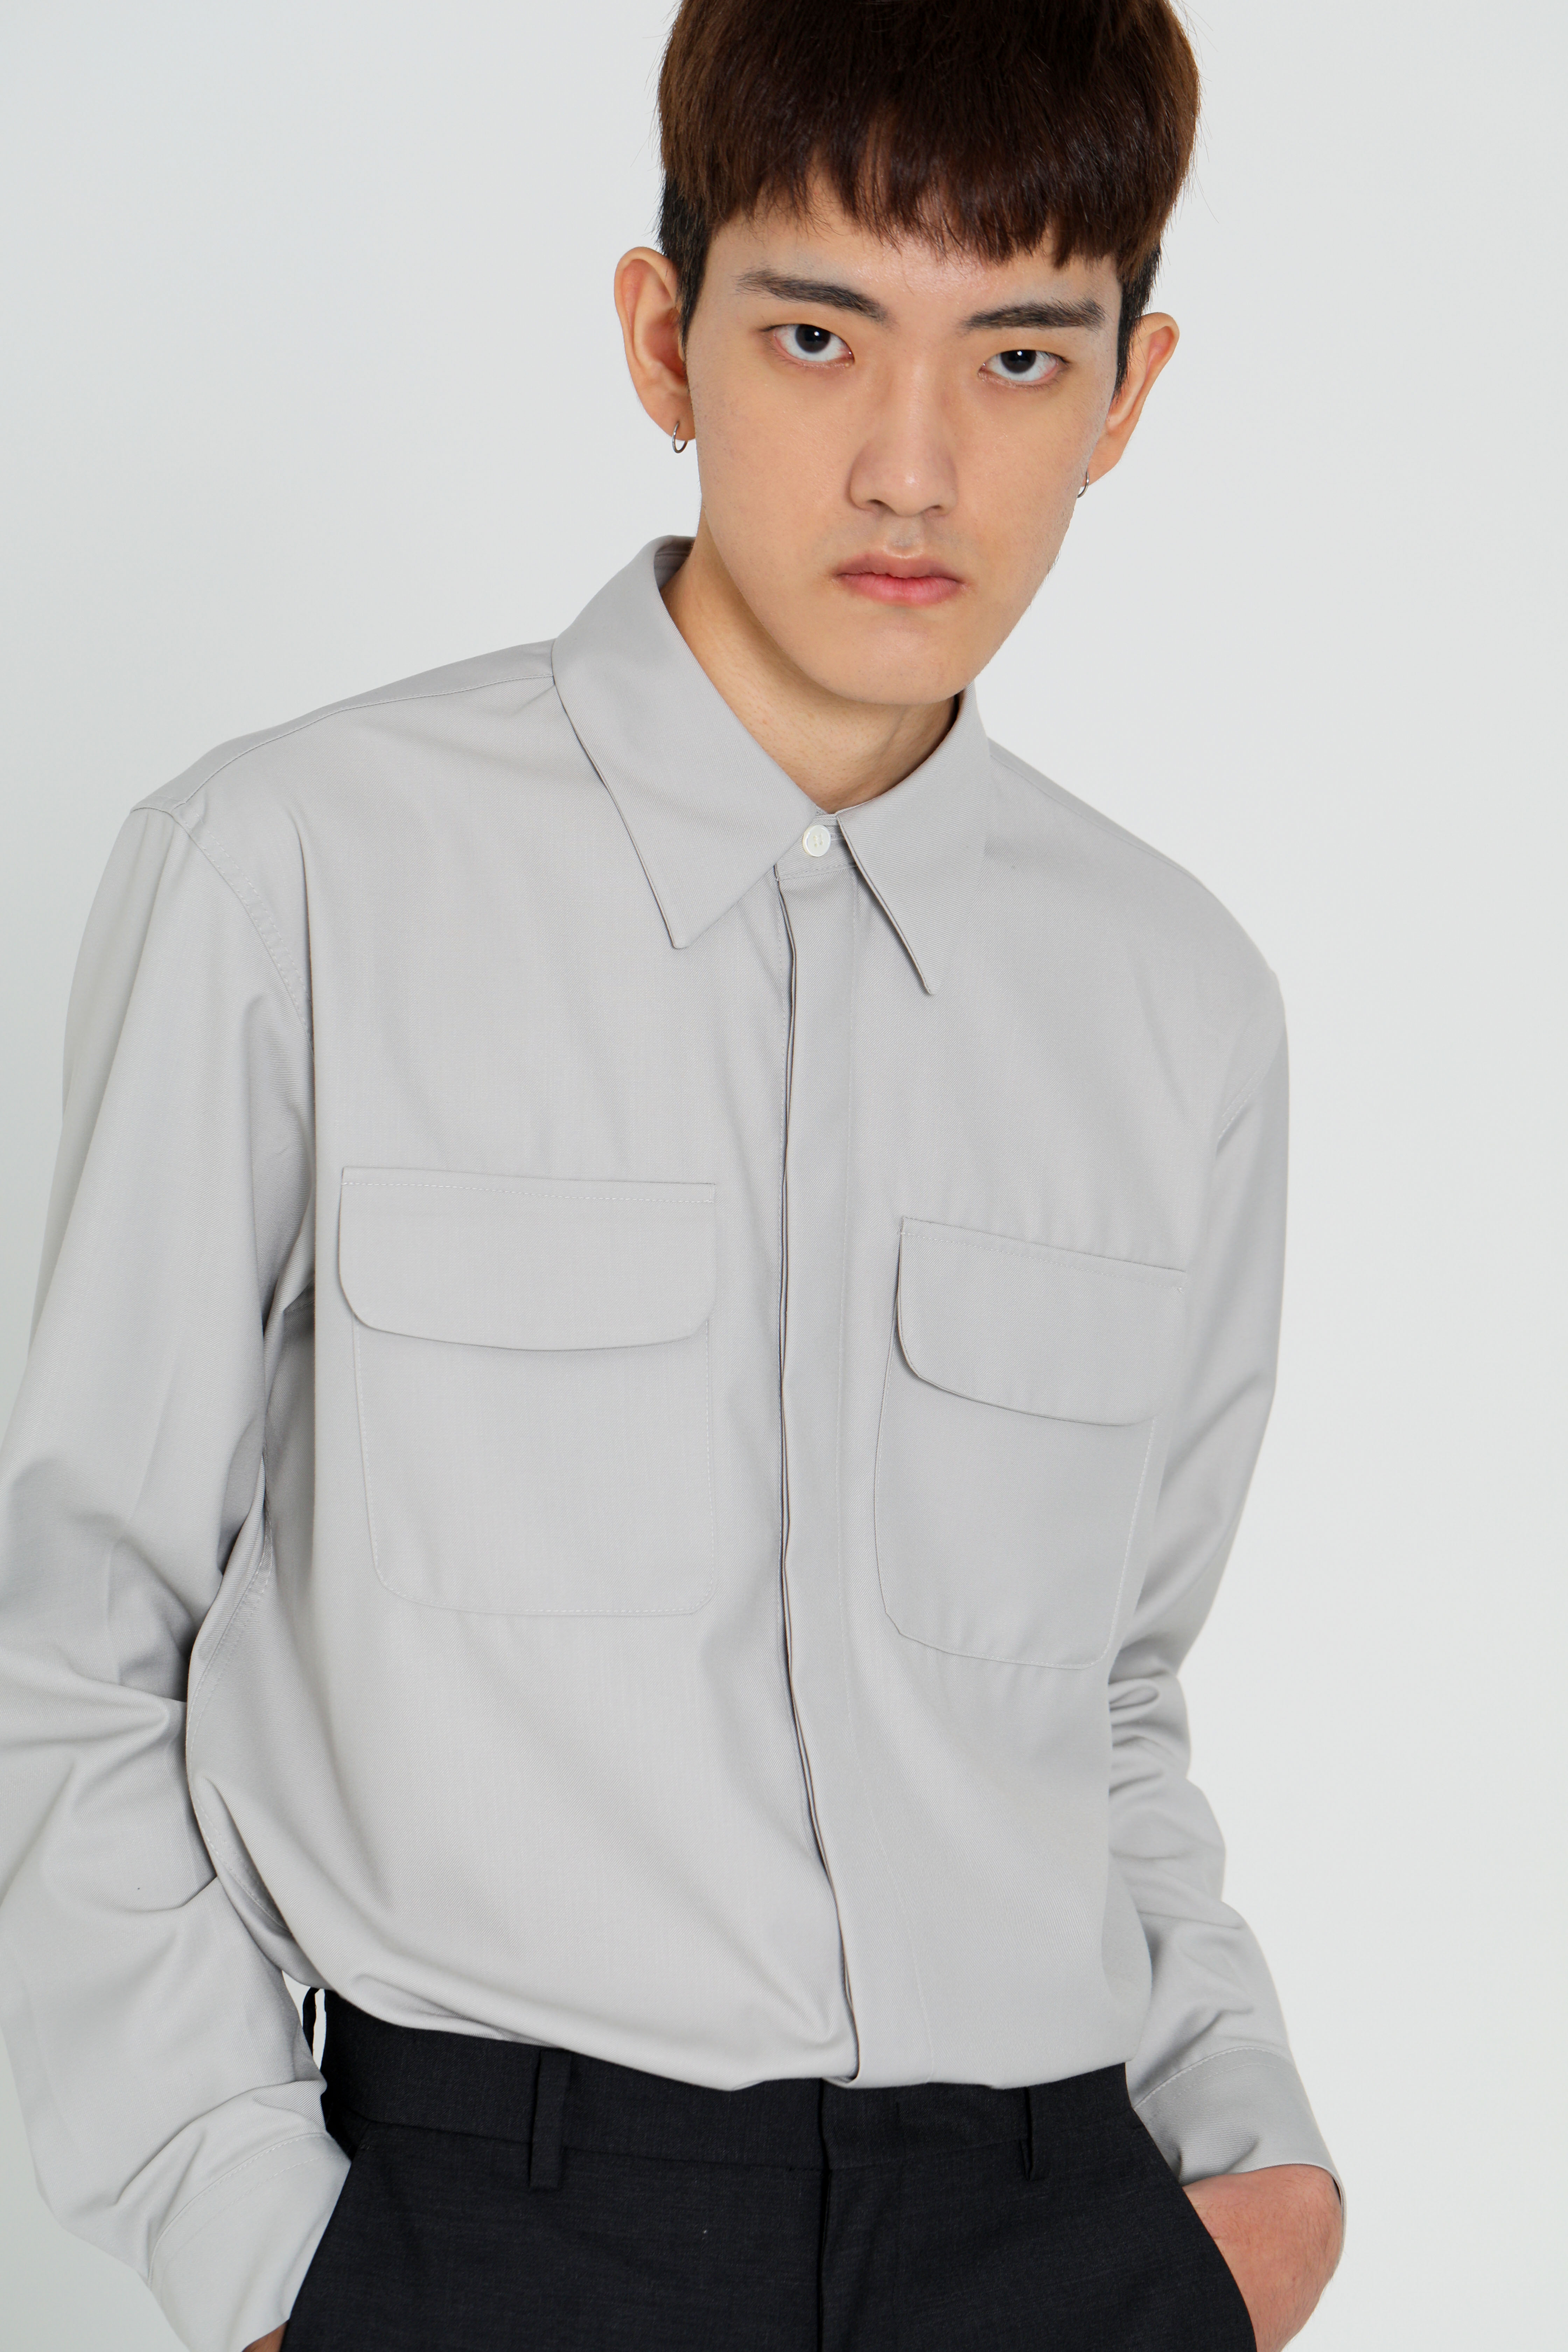 Pocket shirt - gray